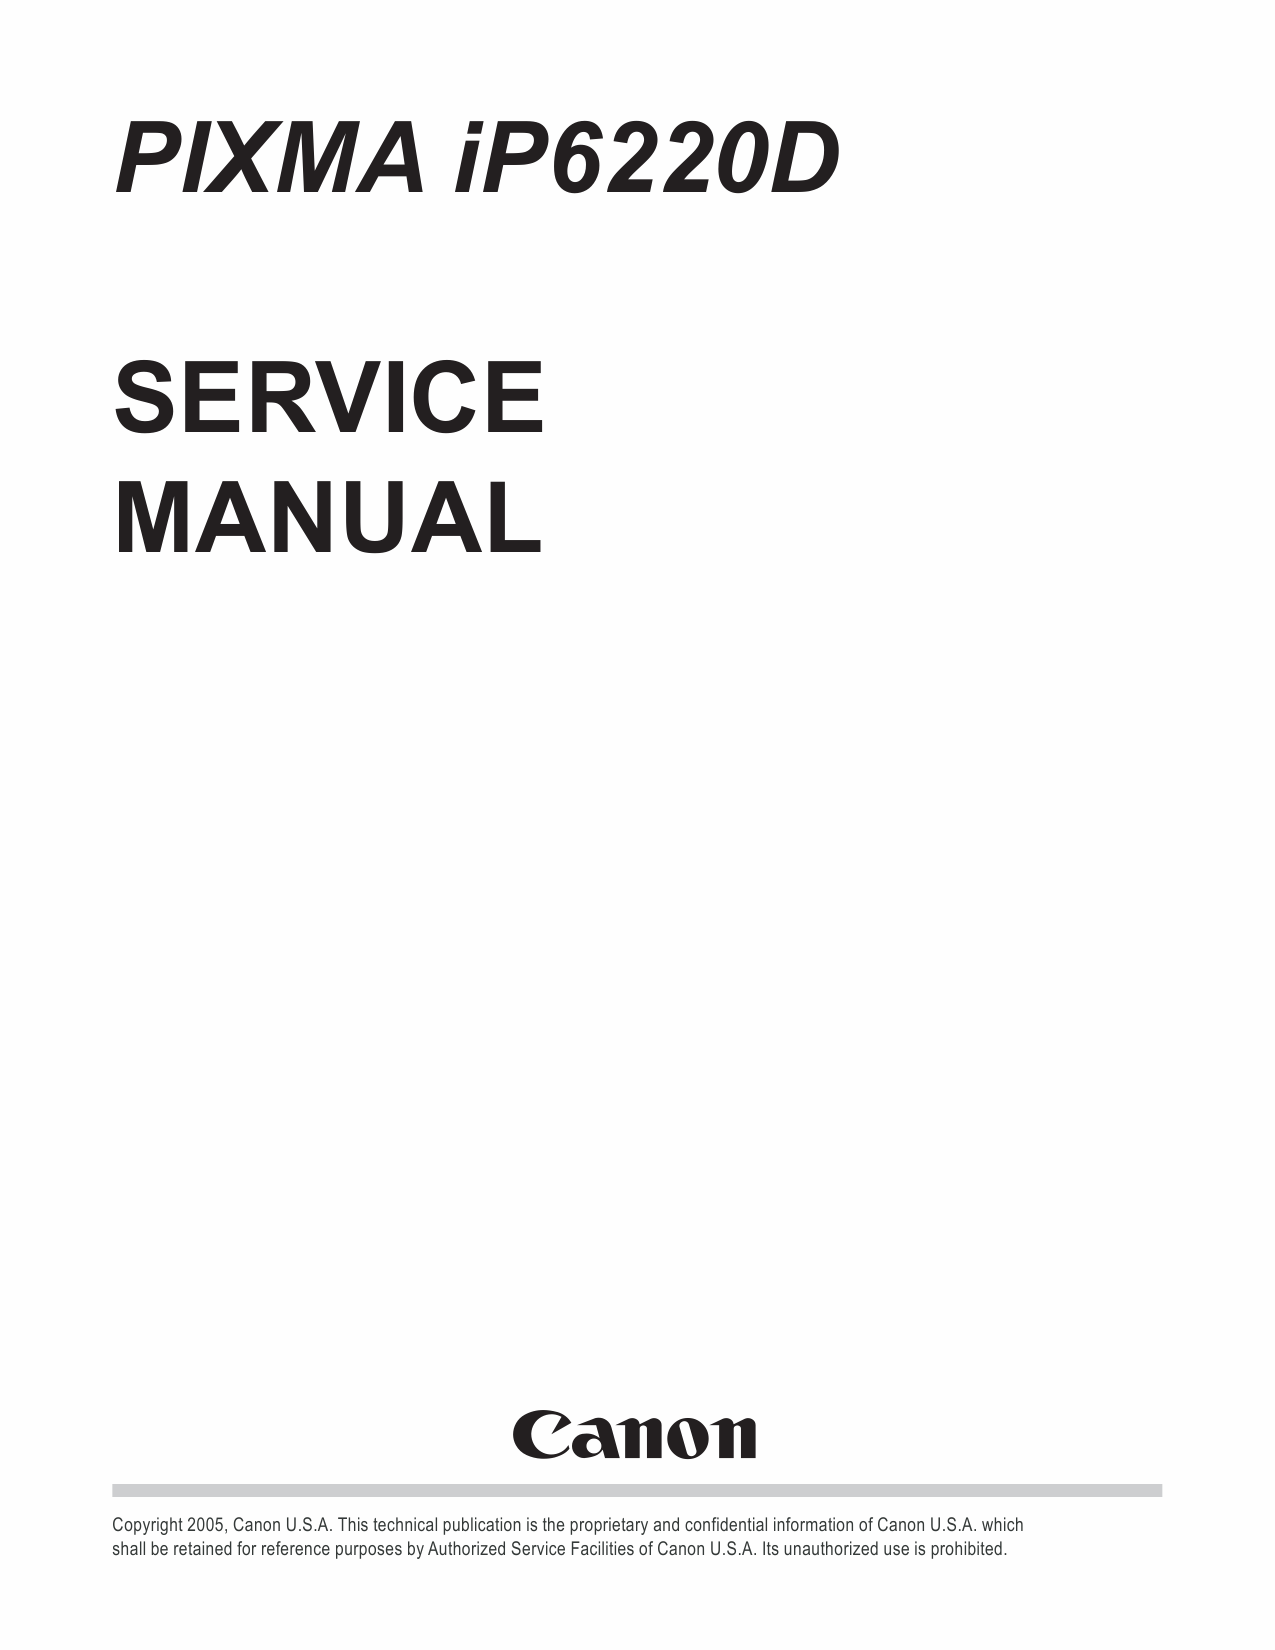 Canon PIXMA iP6220D Service Manual-1